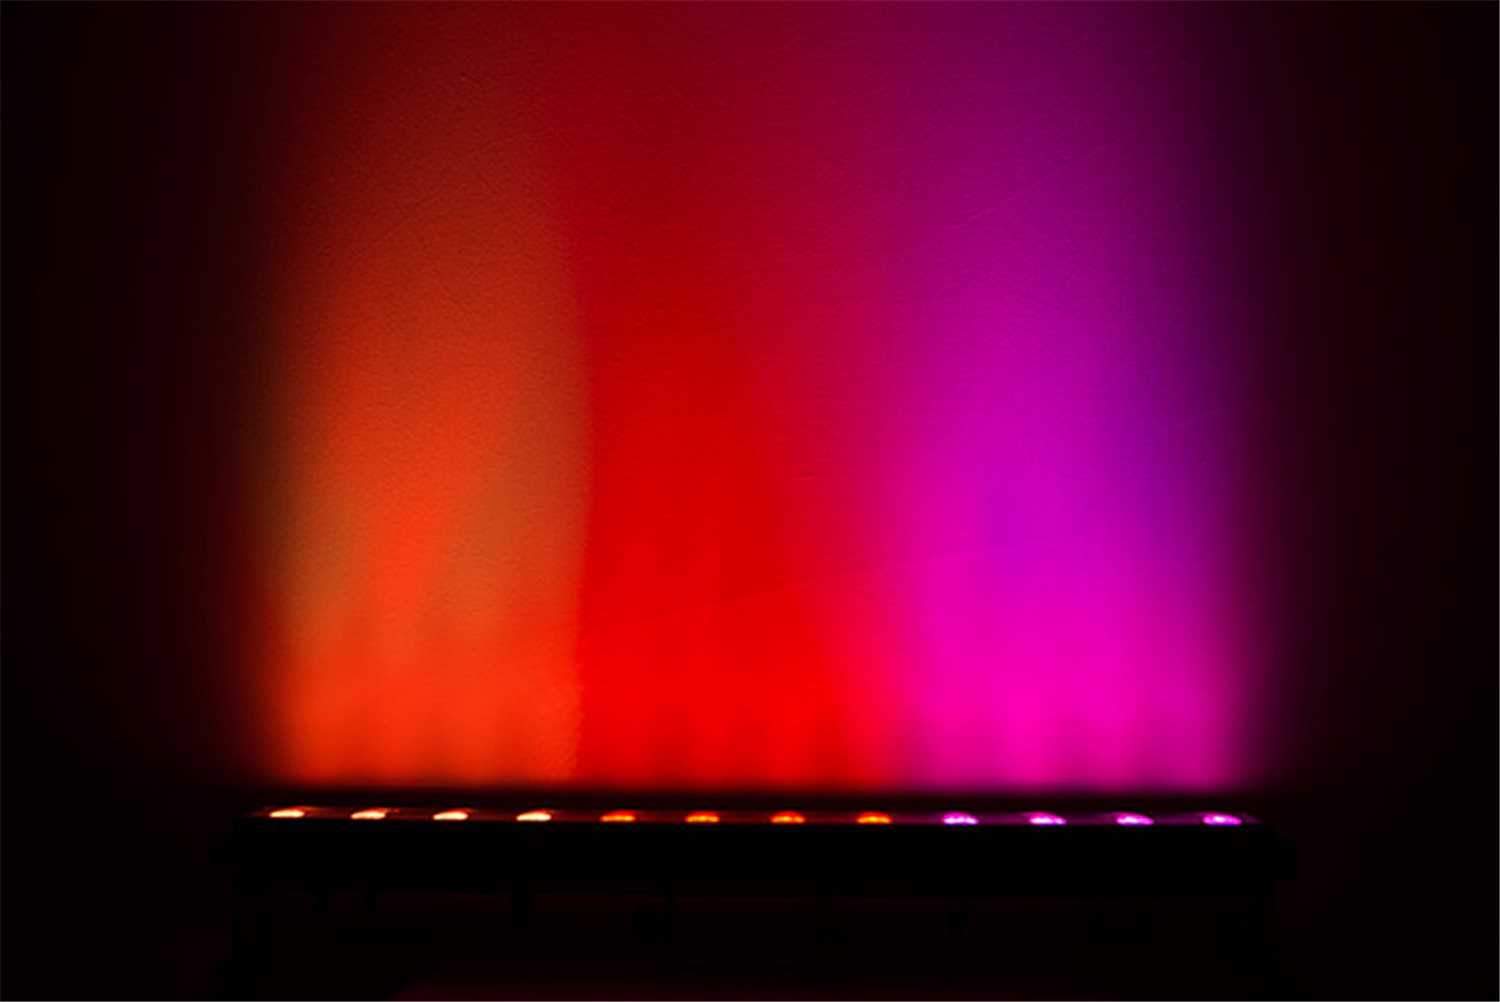 Chauvet COLORband 3 IRC RGB LED DMX Wash Light - ProSound and Stage Lighting